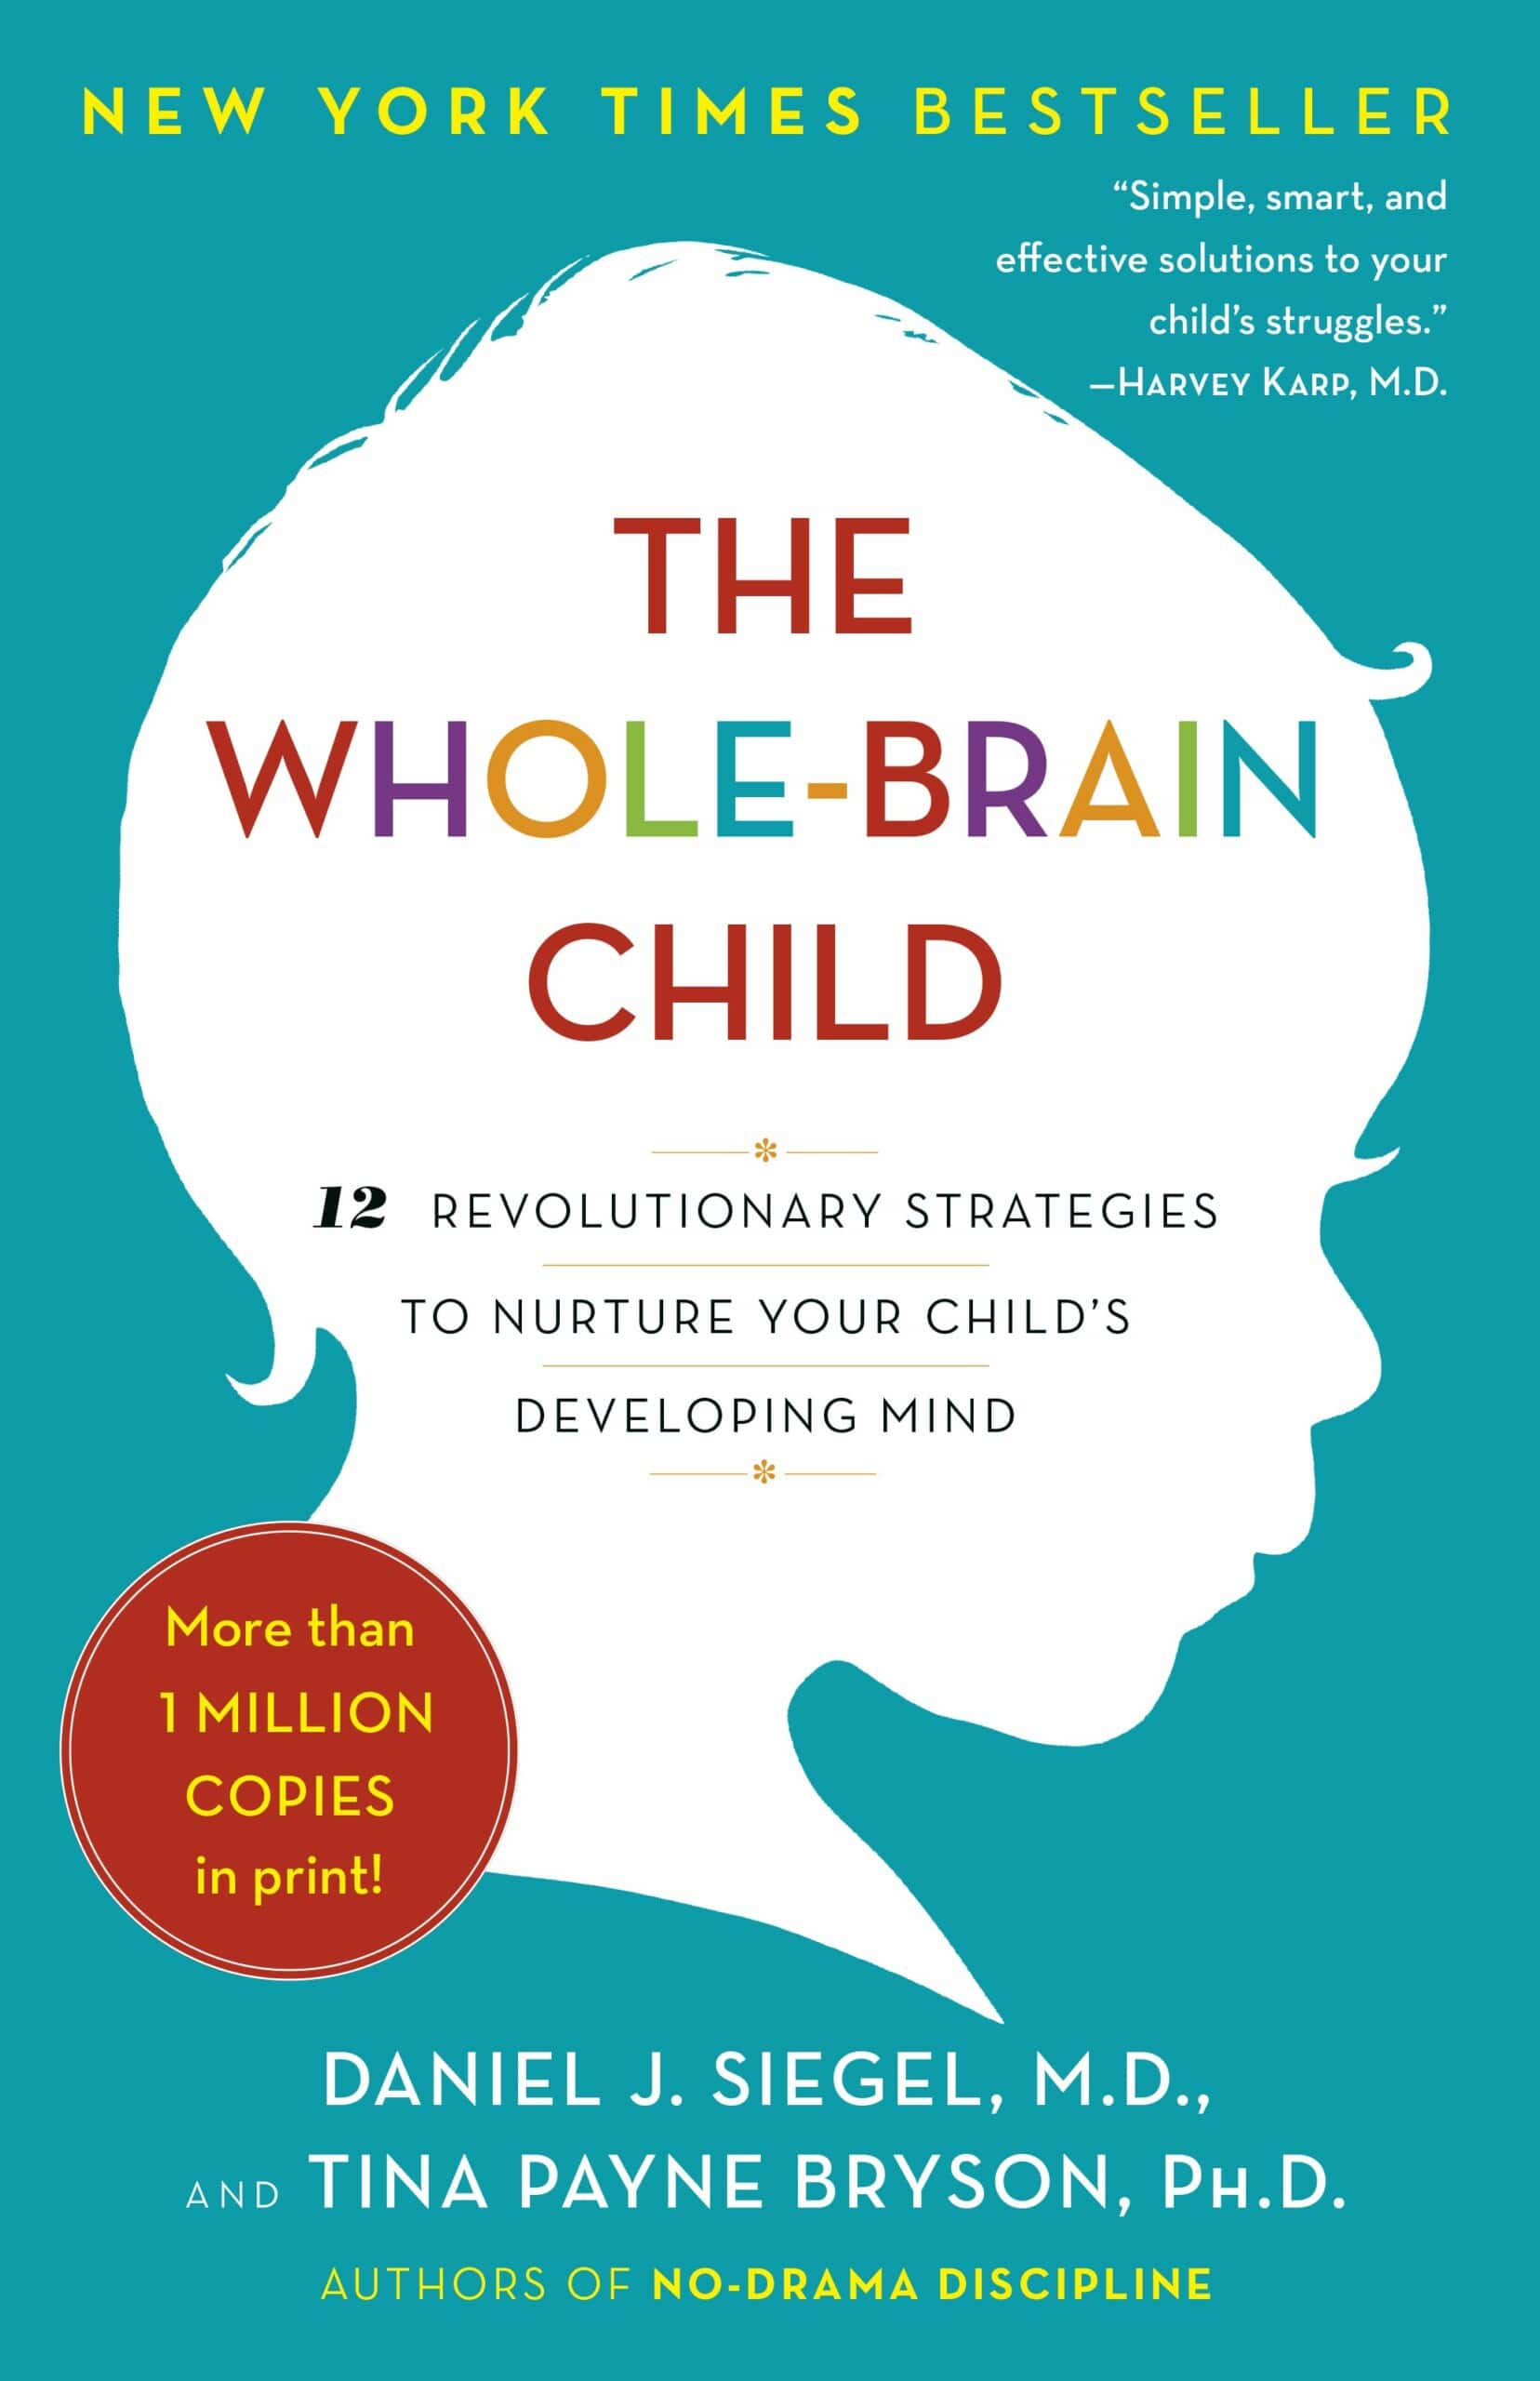 "The Whole-Brain Child" by Daniel J. Siegel, M.D., and Tina Payne Bryson, Ph.D.